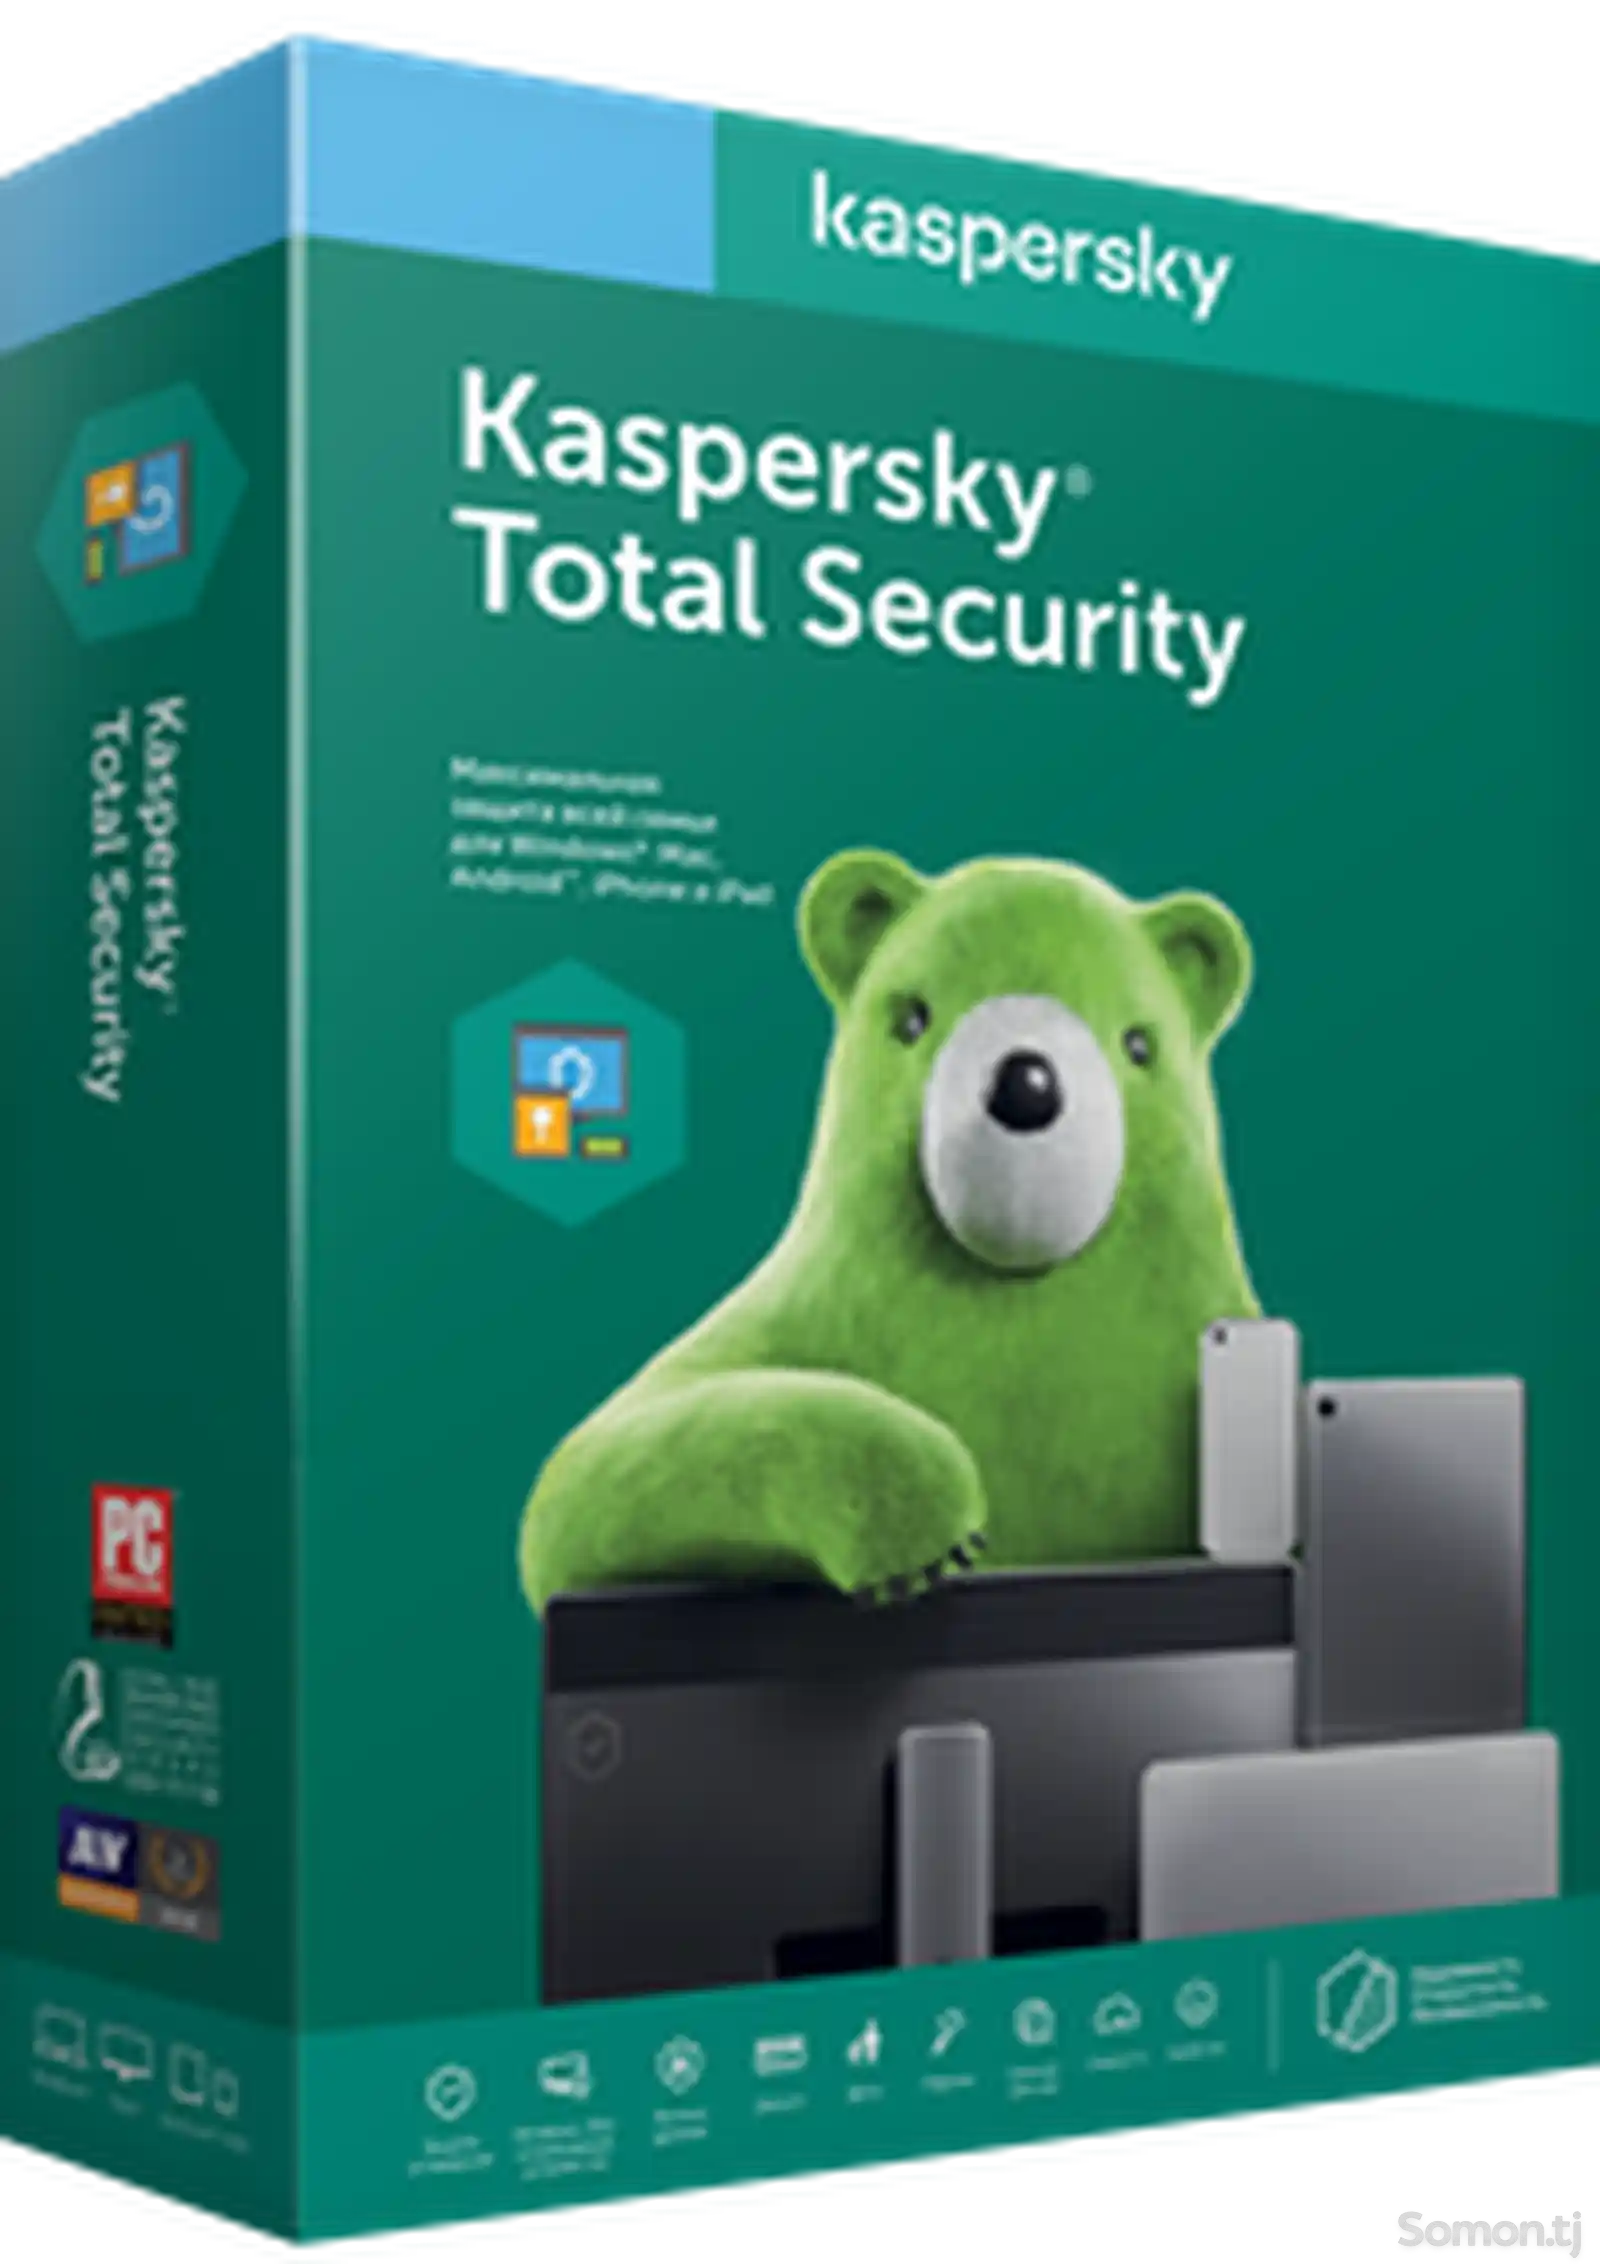 Kaspersky Total Security - иҷозатнома барои 2 роёна, 1 сол